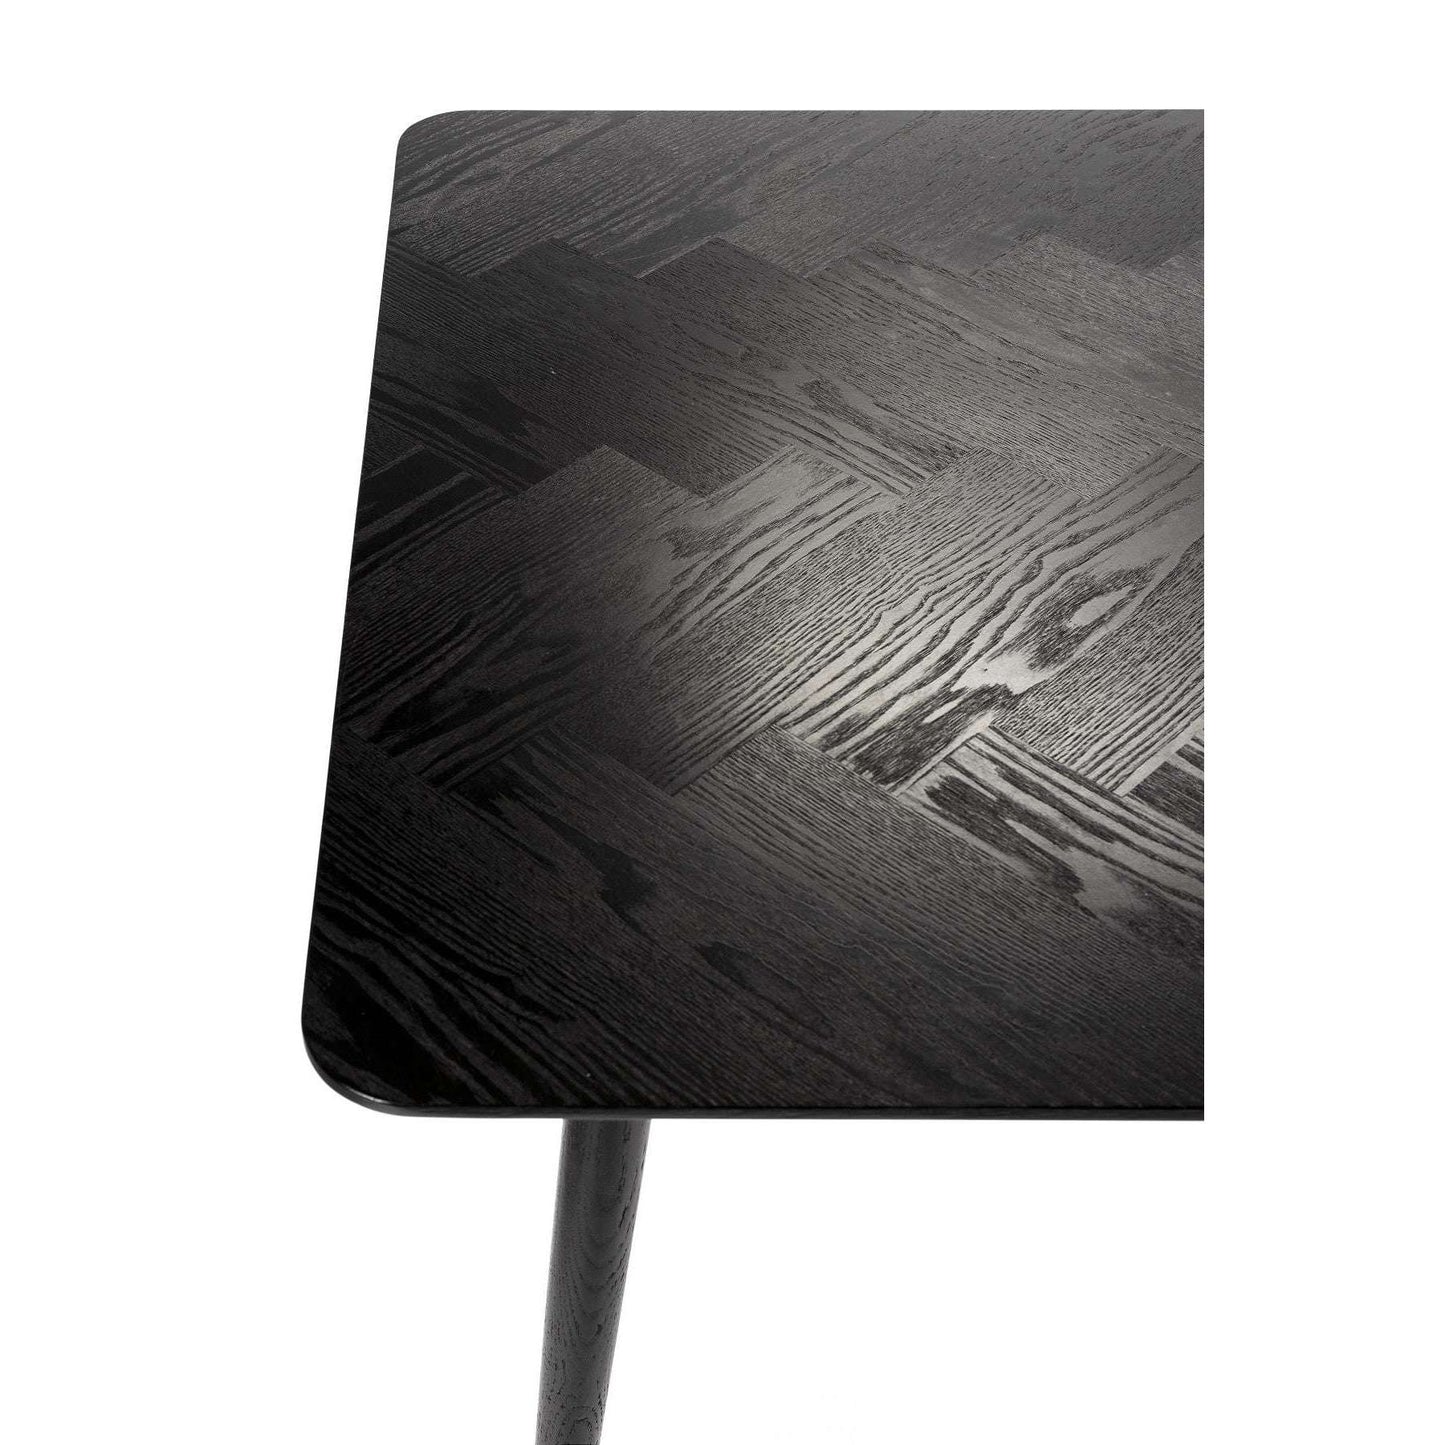 Staerkk tafel Fabio zwart 160 x 80 cm